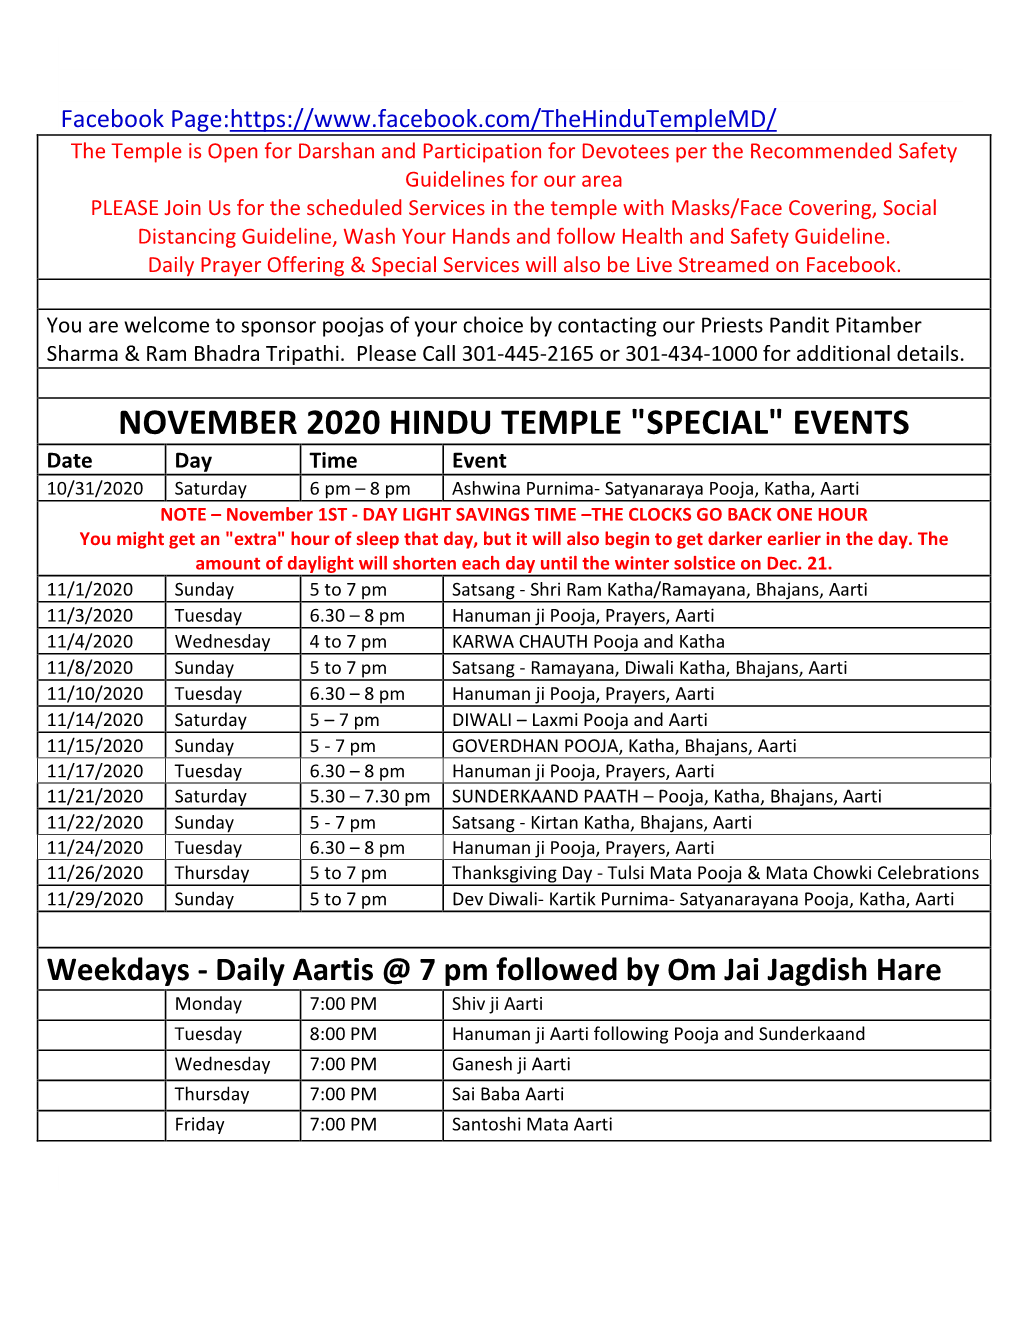 November 2020 Hindu Temple "Special" Events